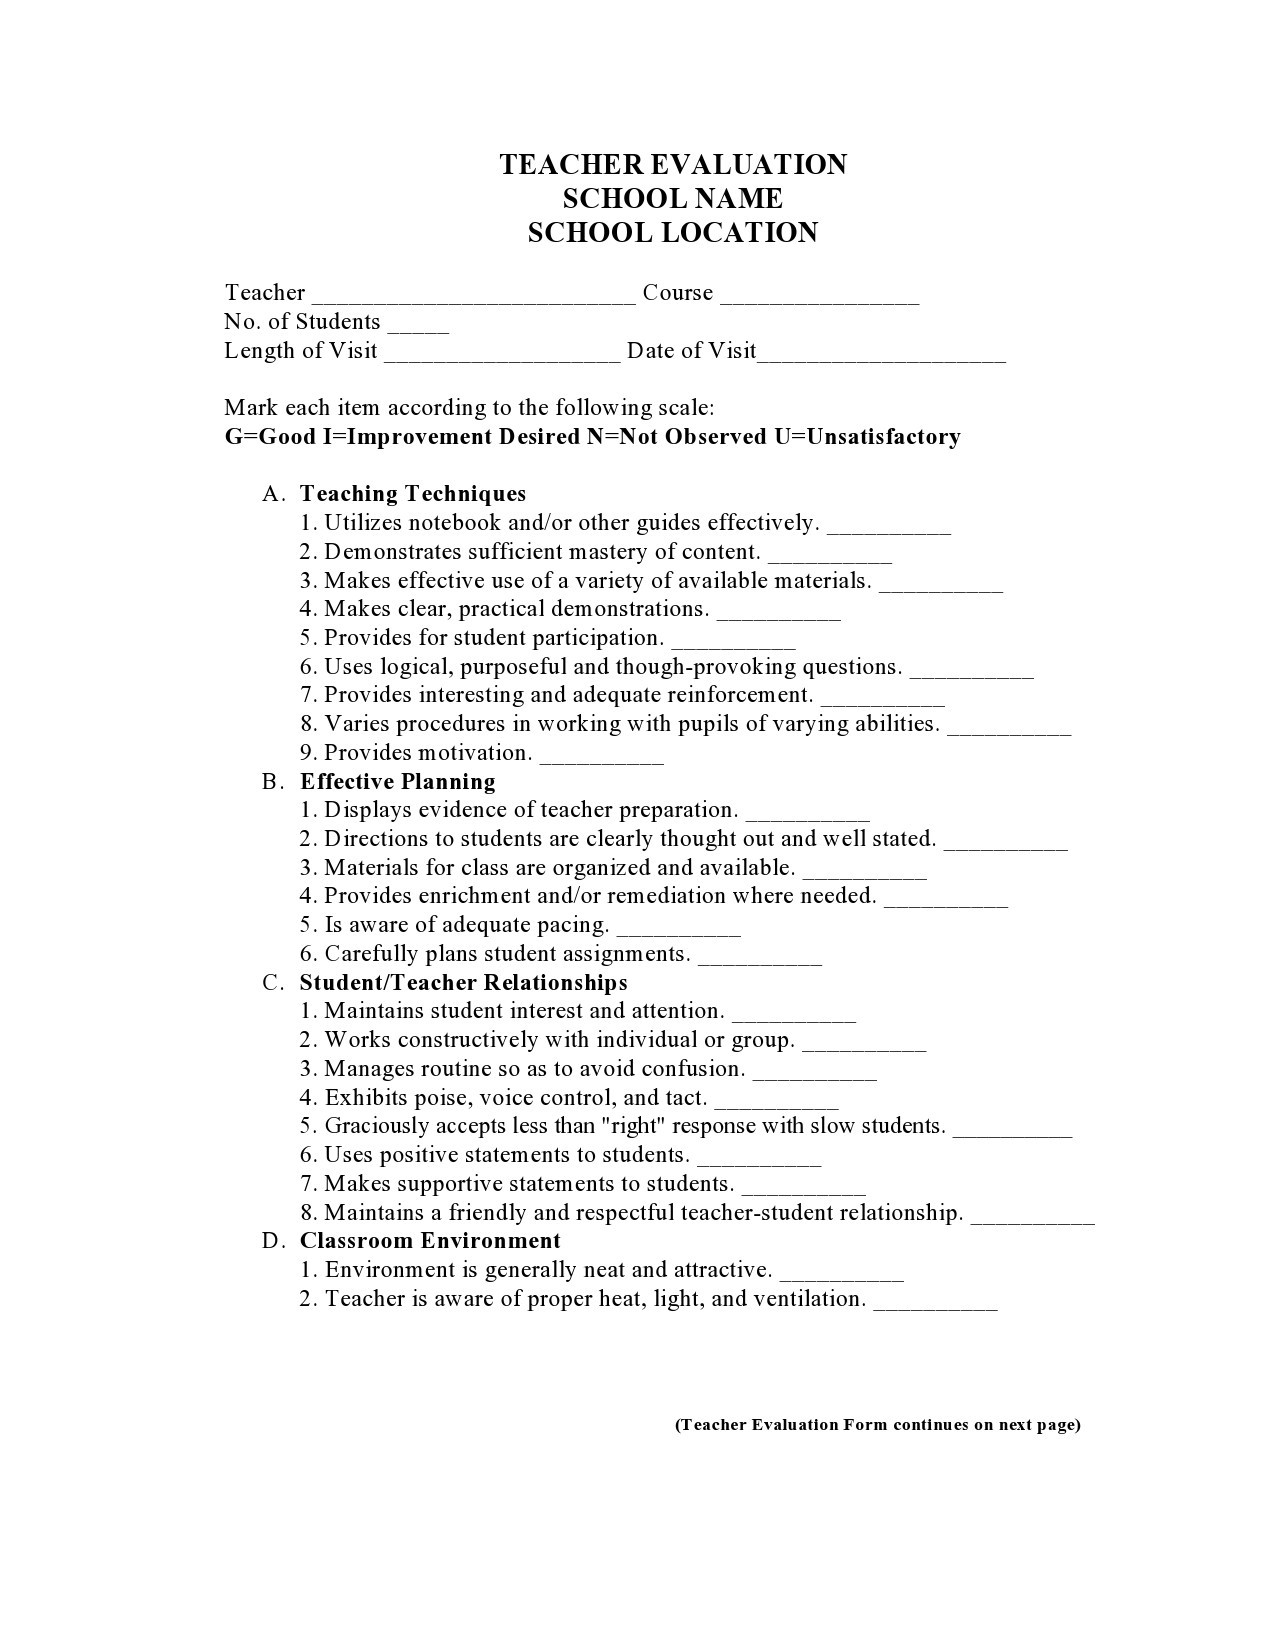 Free teacher evaluation form 01